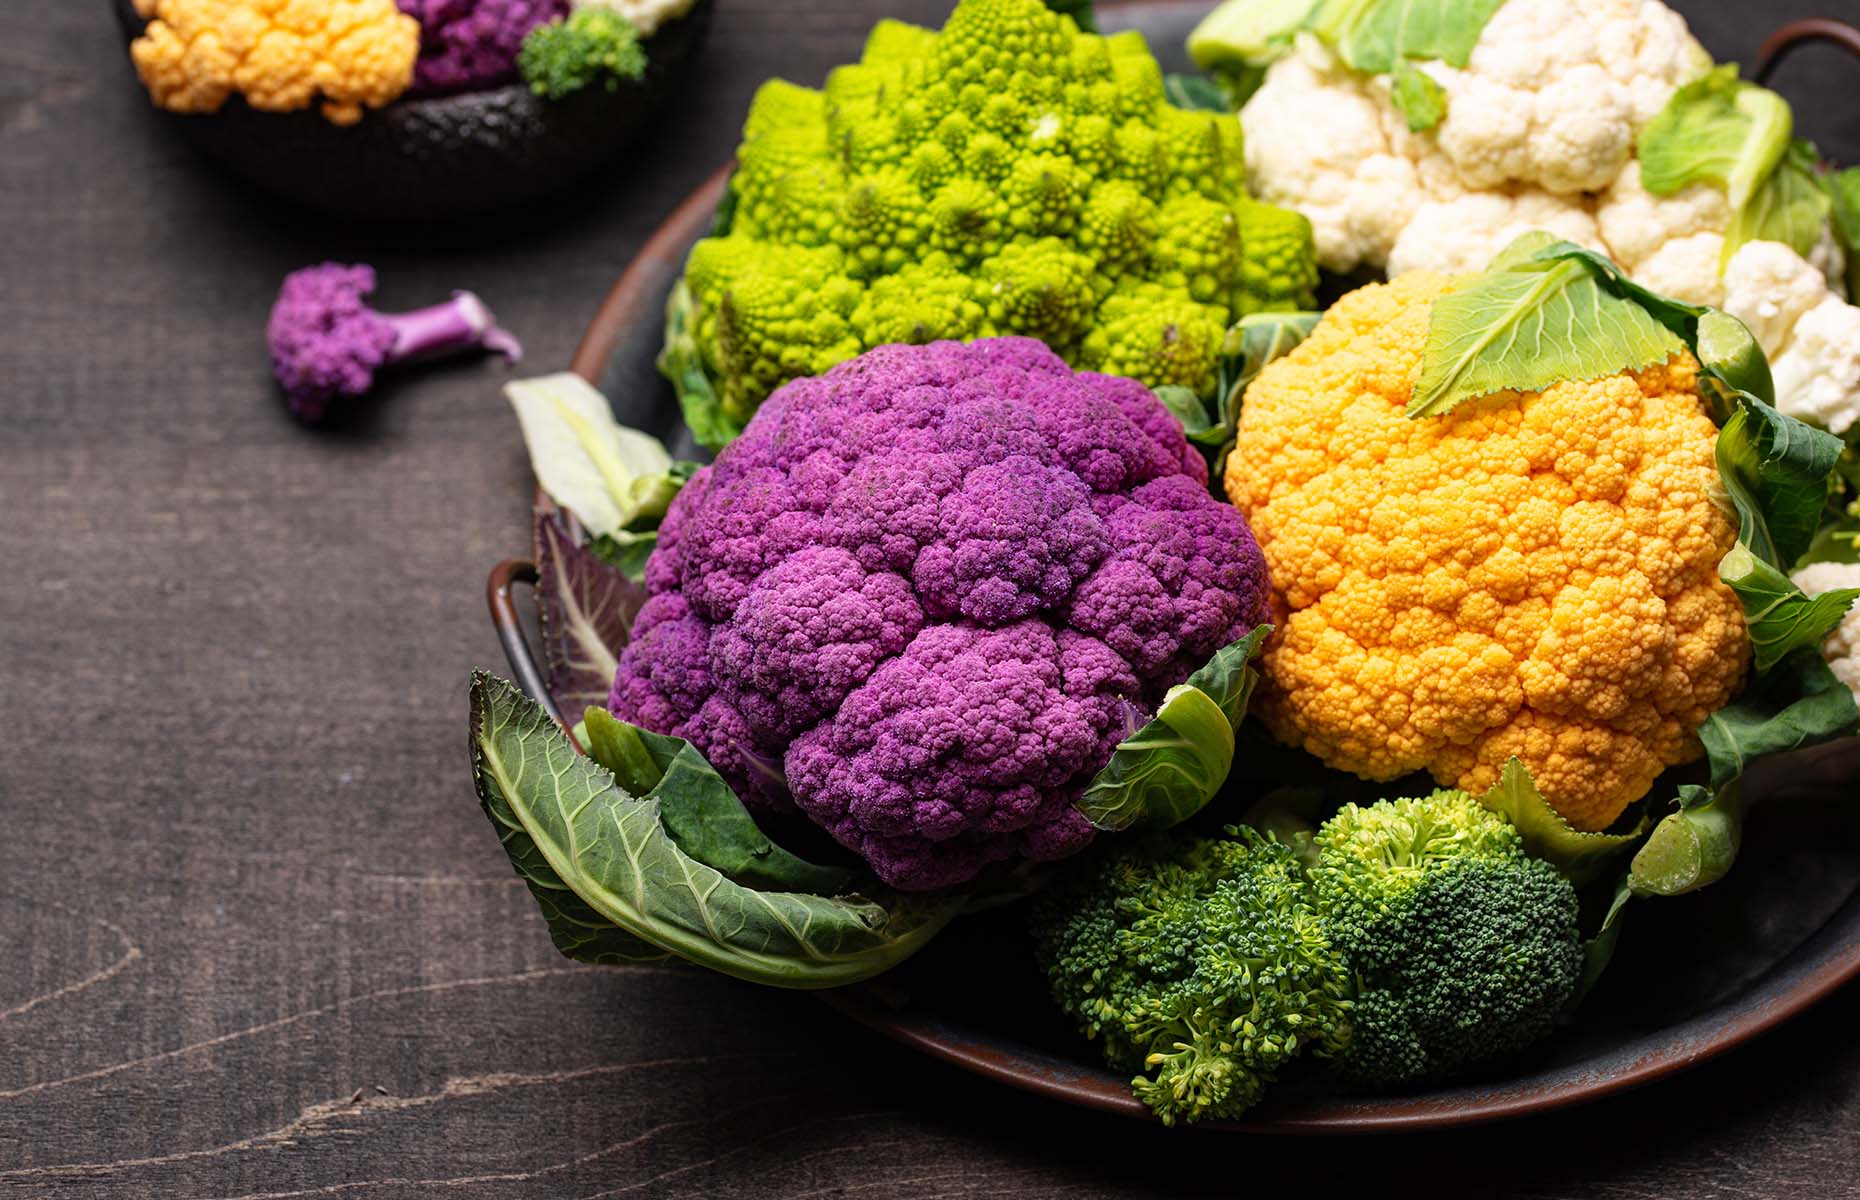 Colourful cauliflower (Image: Yulia Furman/Shutterstock)